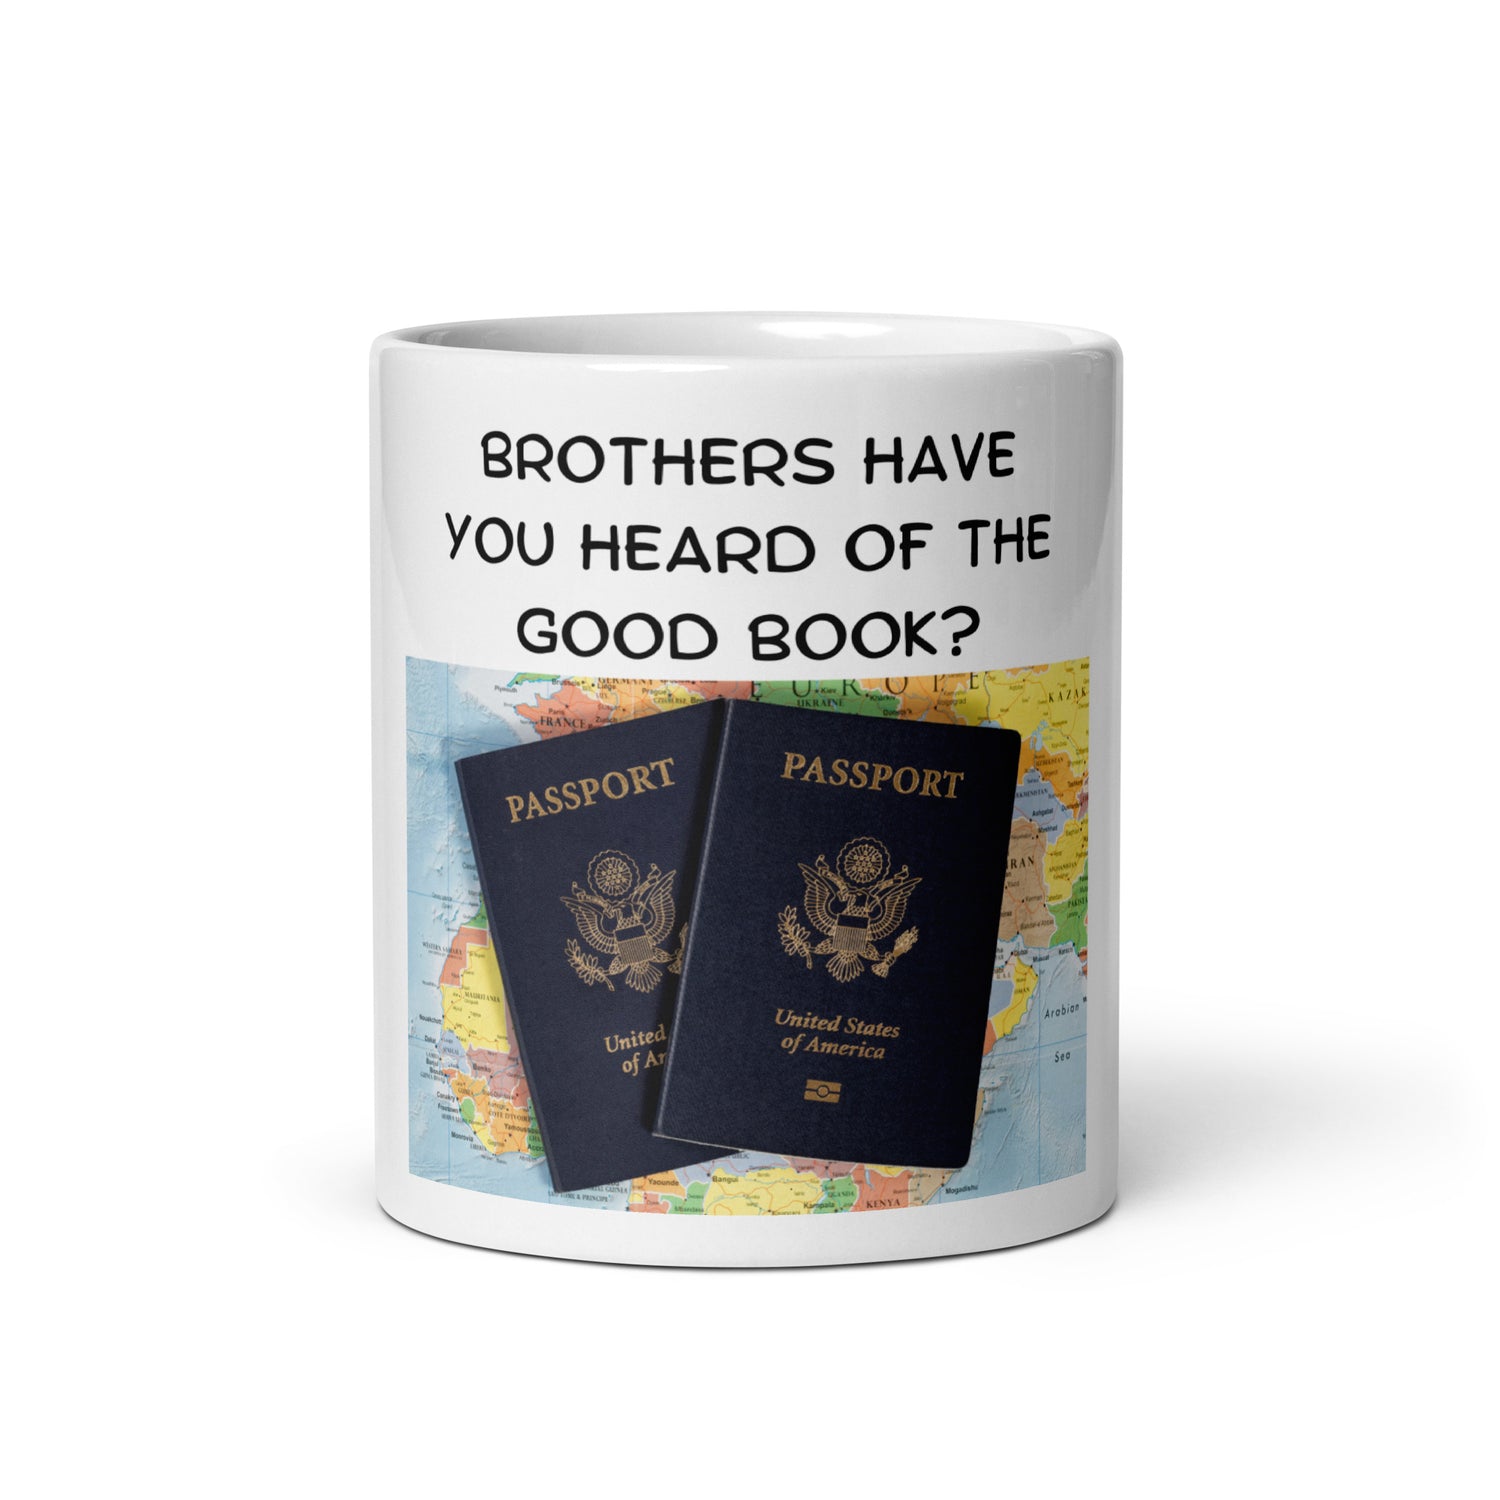 The Good Book Passport coffee mug